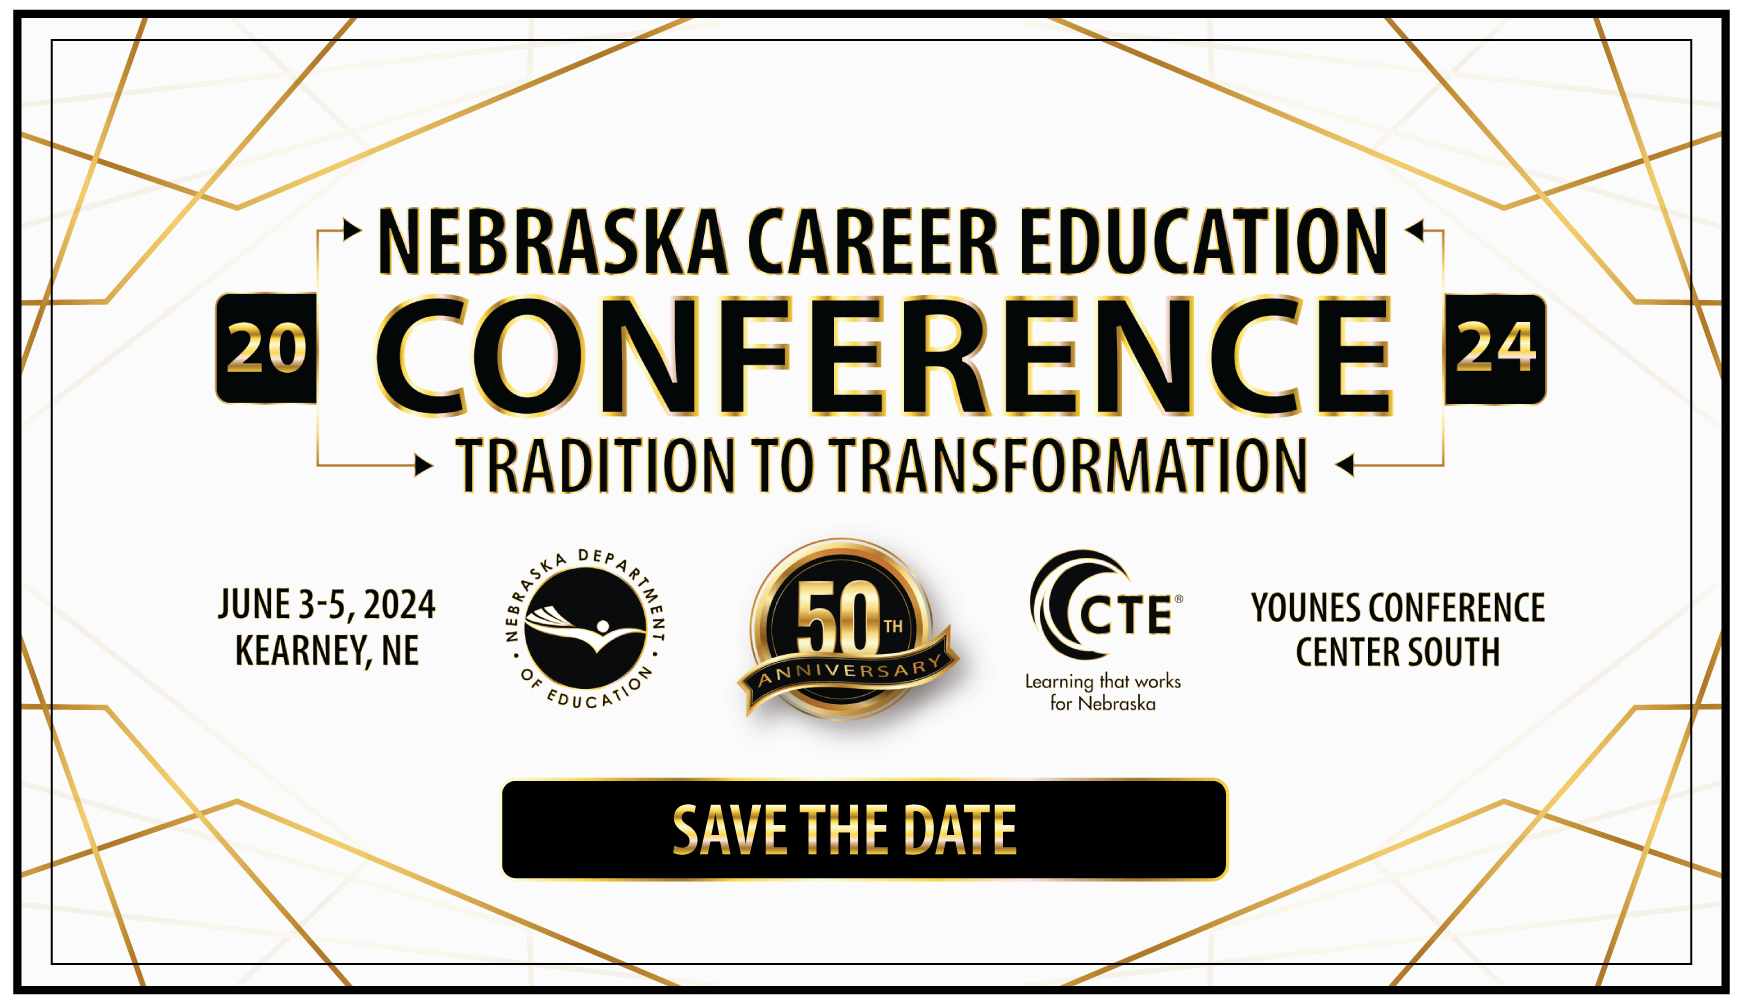 Nebraska Career Education Conference Nebraska Department of Education